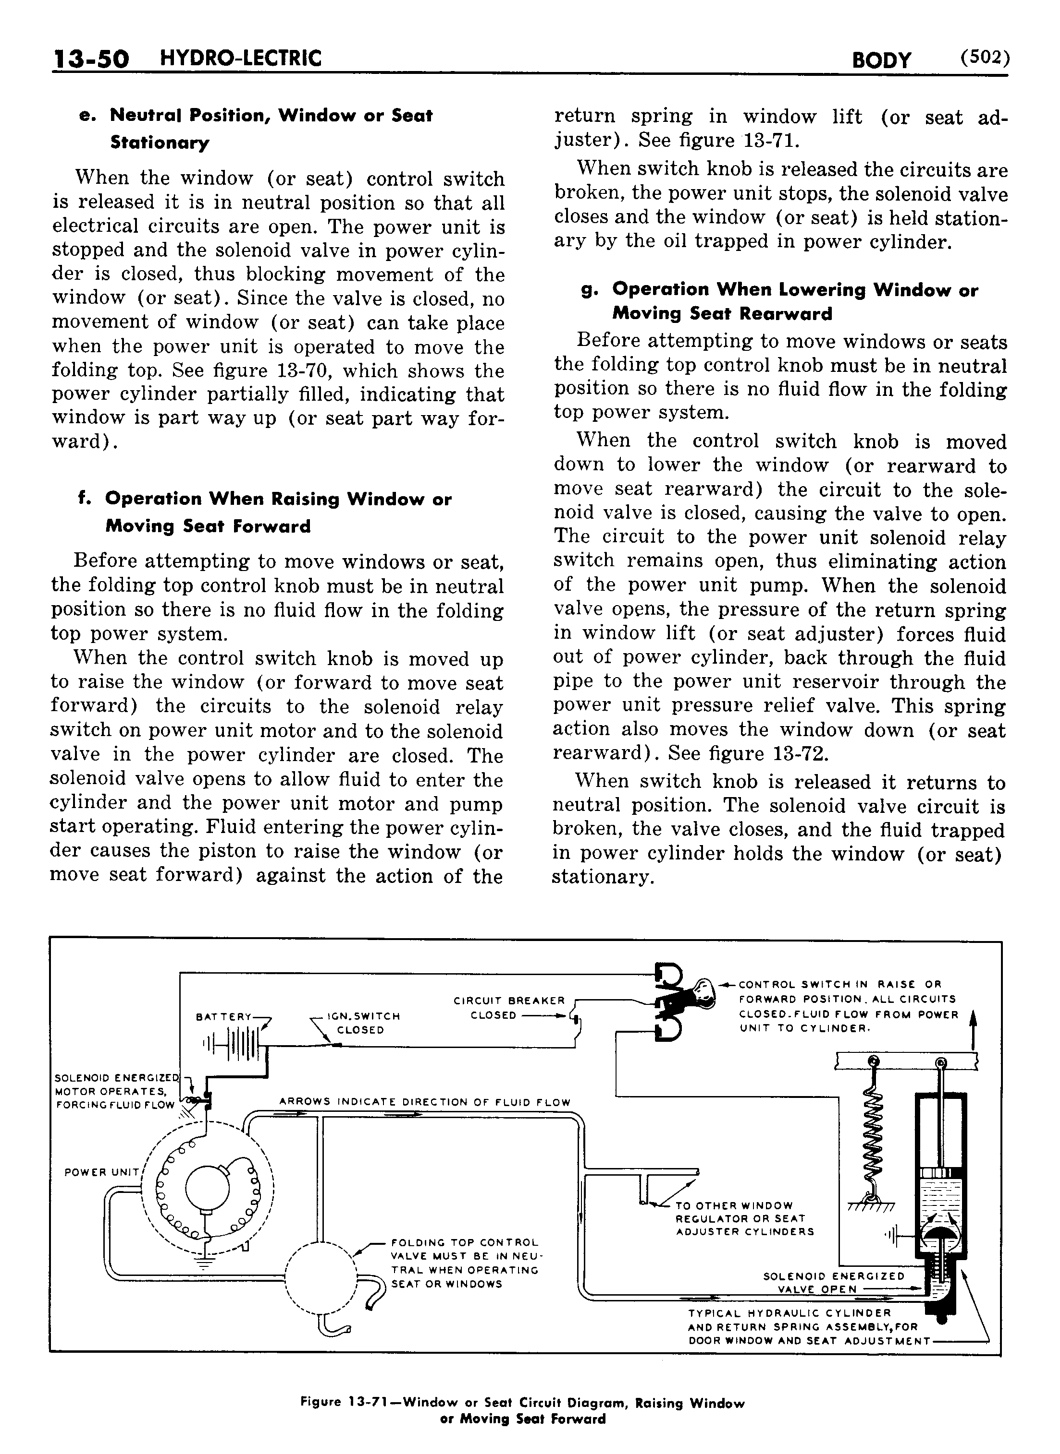 n_14 1948 Buick Shop Manual - Body-050-050.jpg